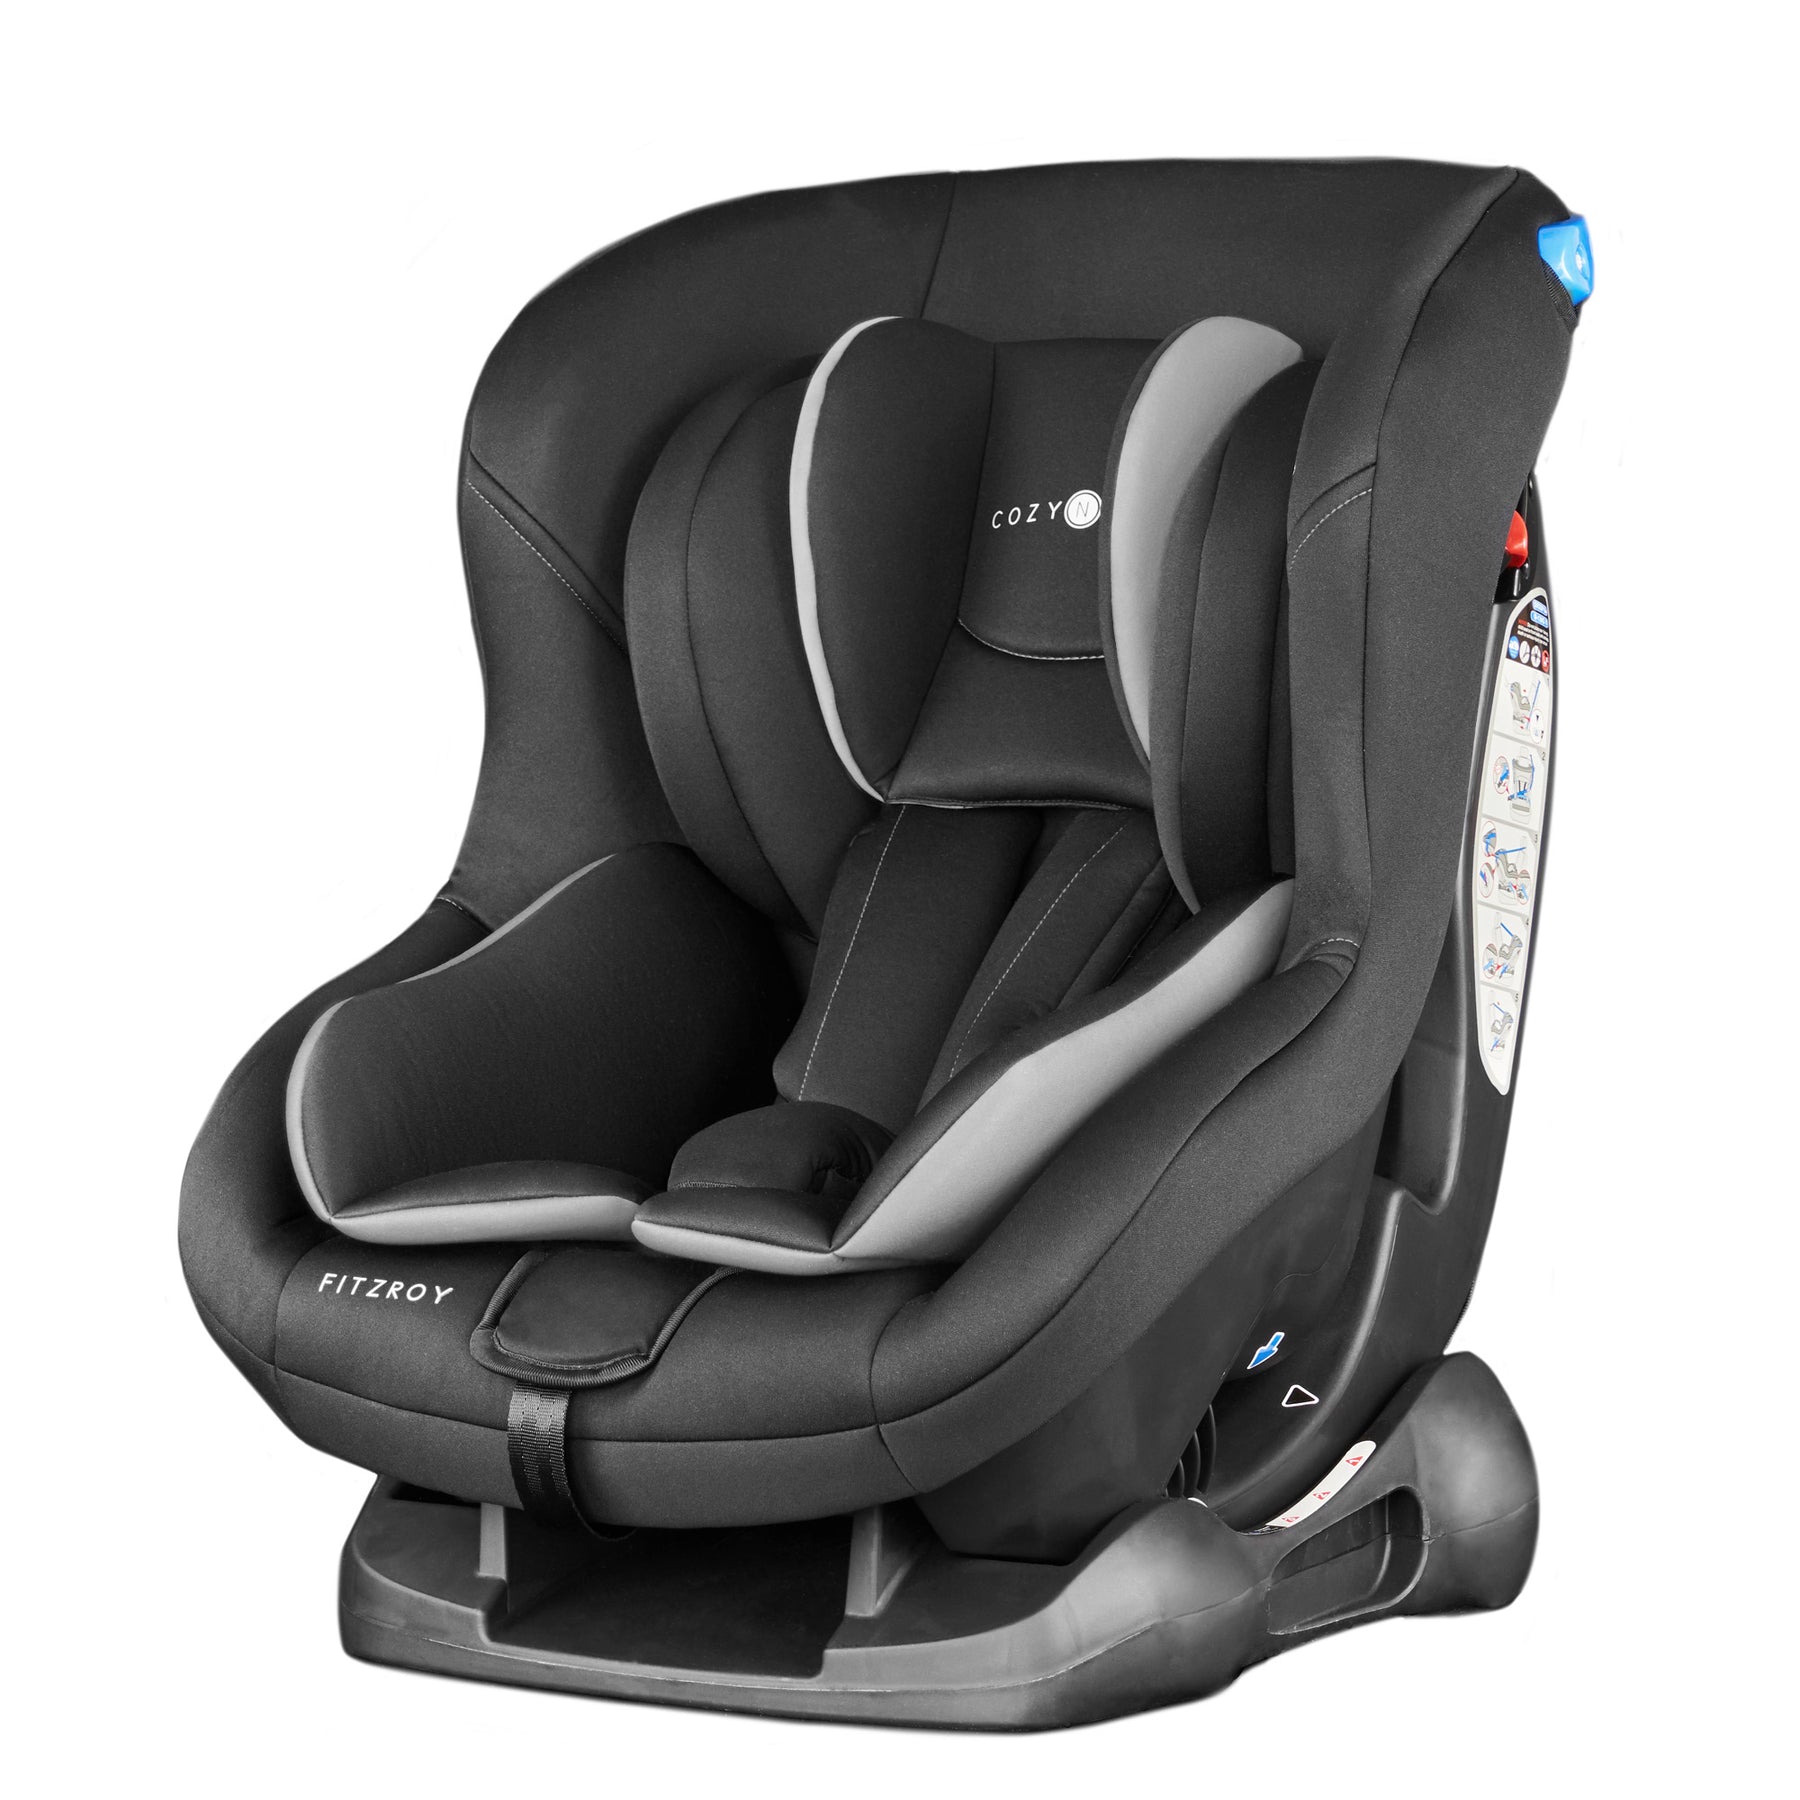 Fitzroy Group 0+/1 Child Car Seat- Black/Grey